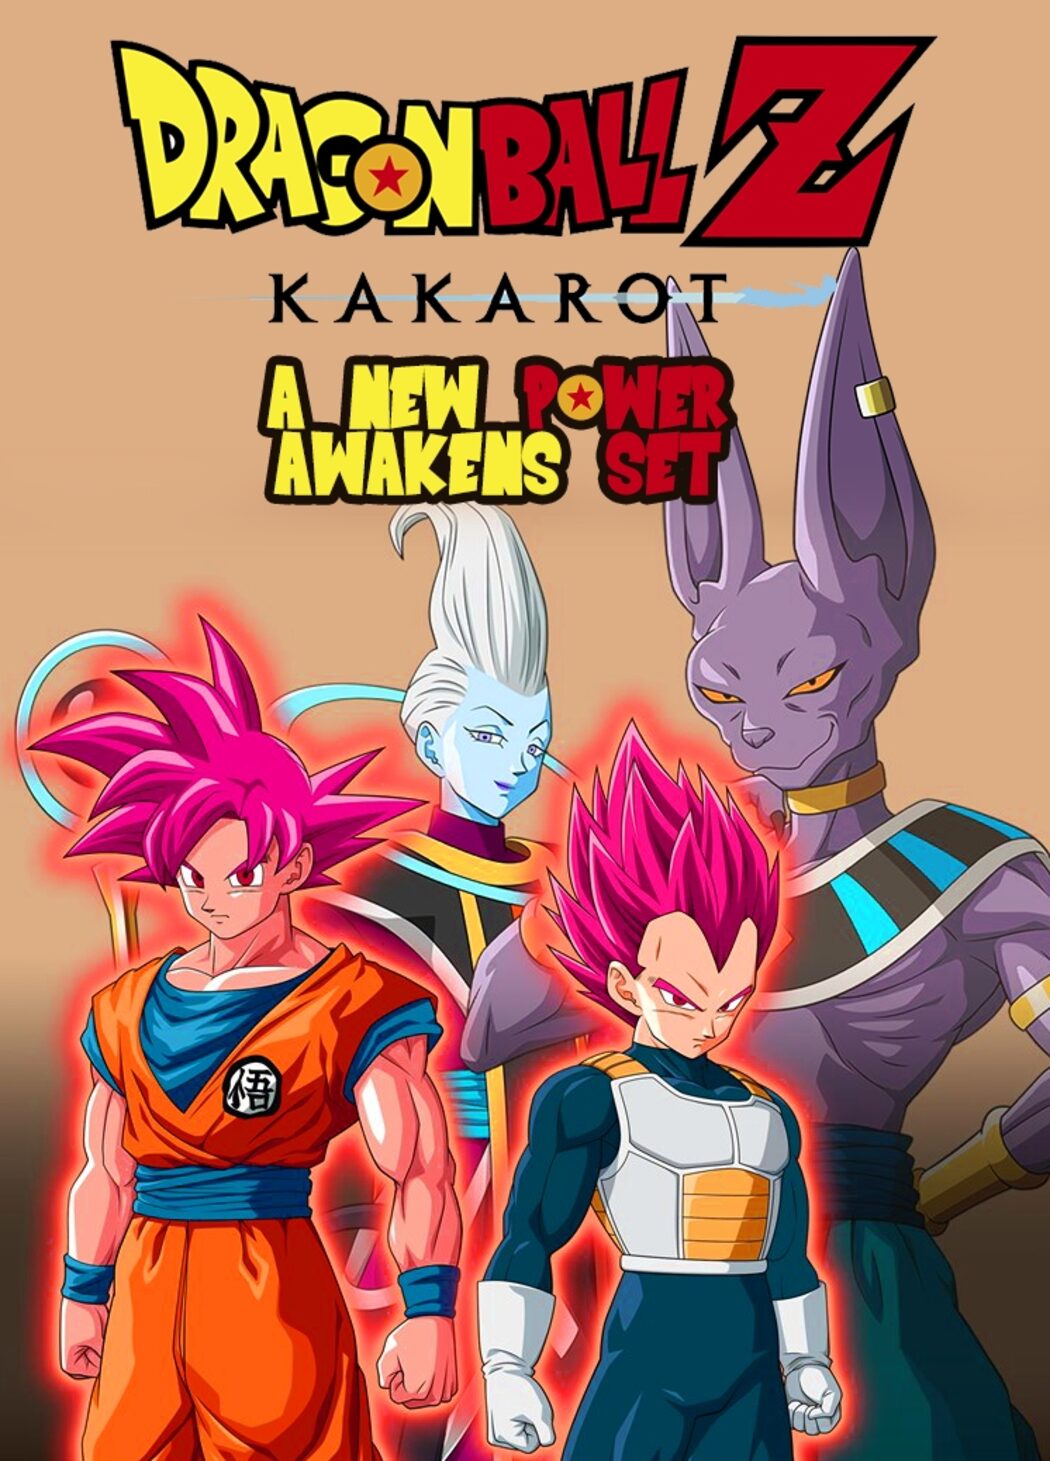 Dragon Ball Z: Kakarot - Um presente para os fãs – Tecnoblog